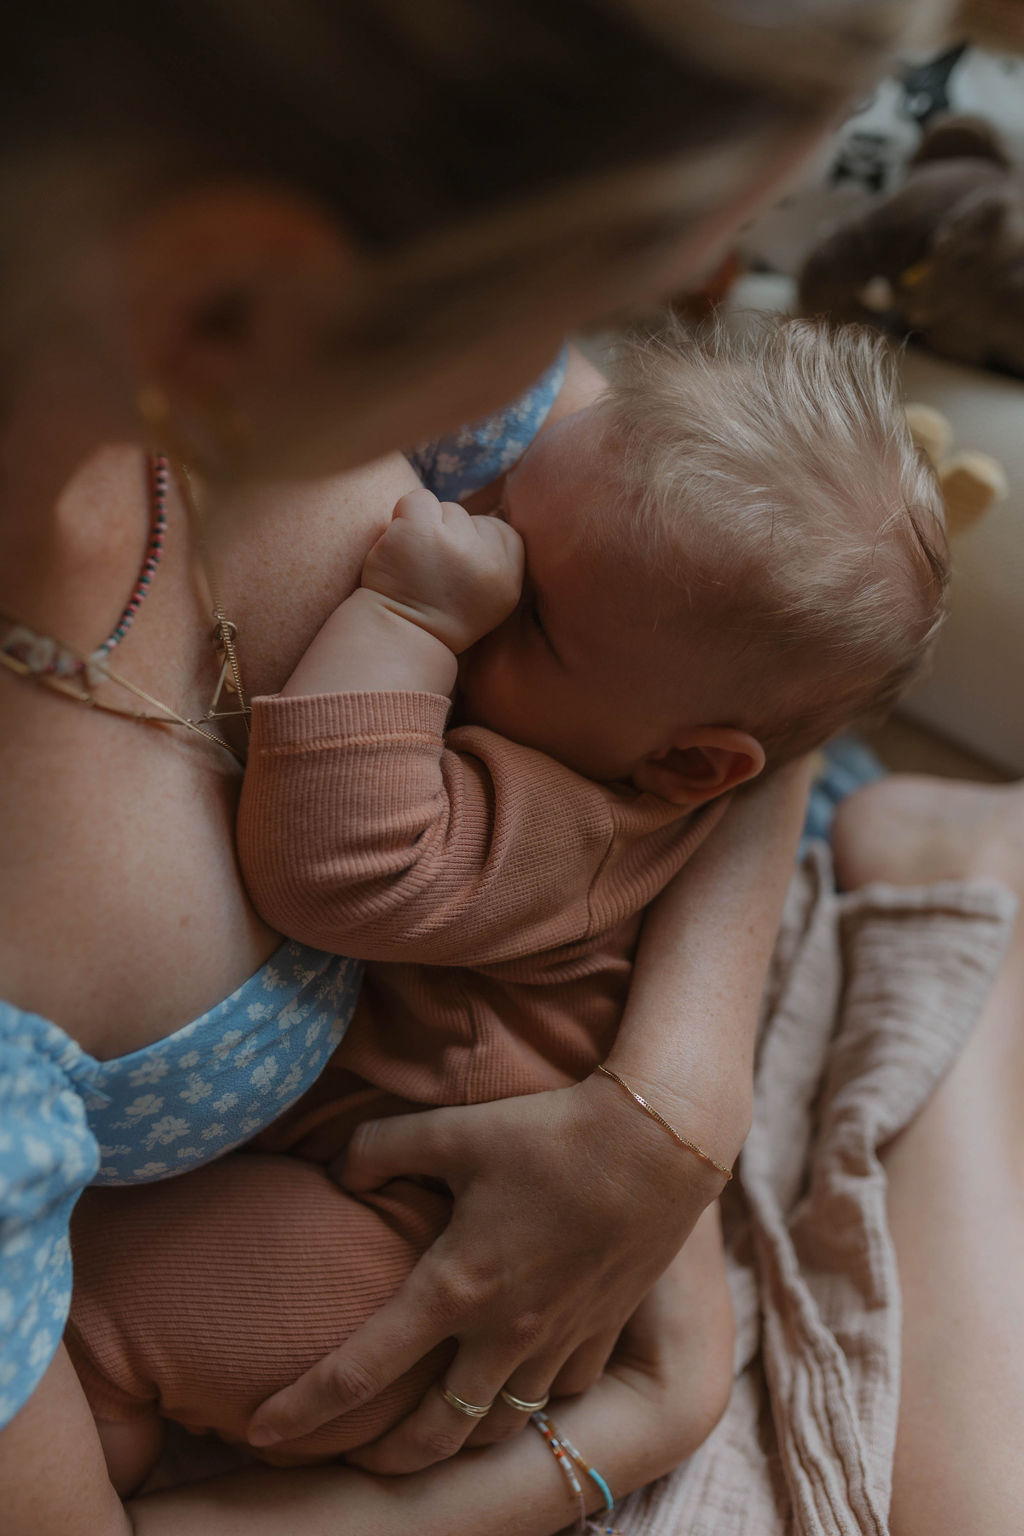 mom in blue dress breastfeeding her 3 month old baby boy